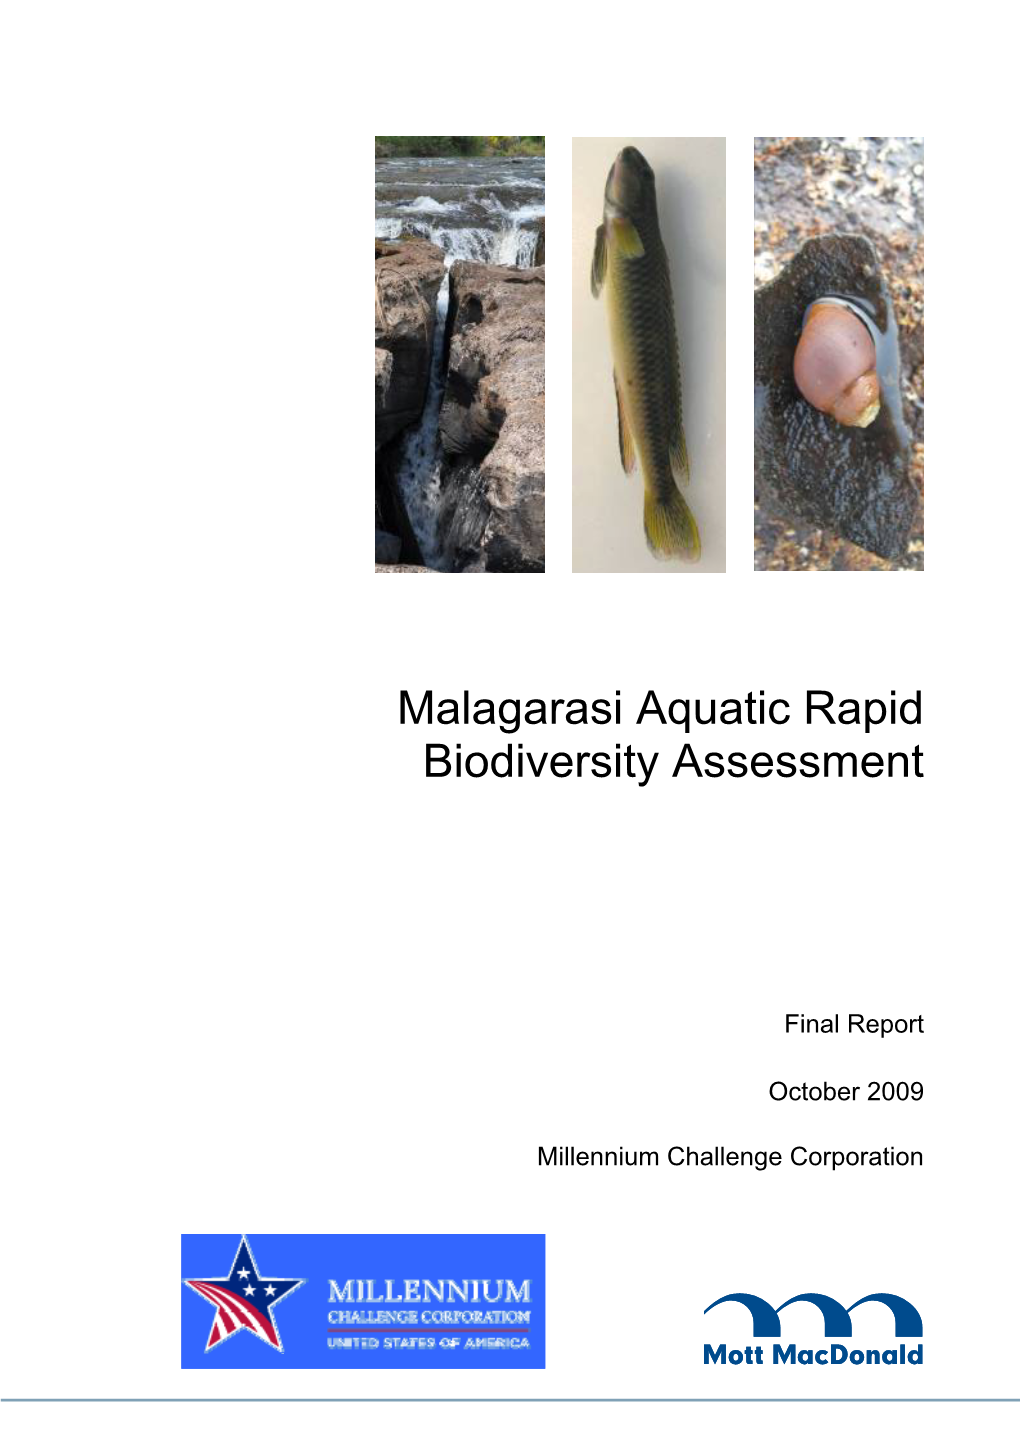 Malagarasi Aquatic Rapid Biodiversity Assessment